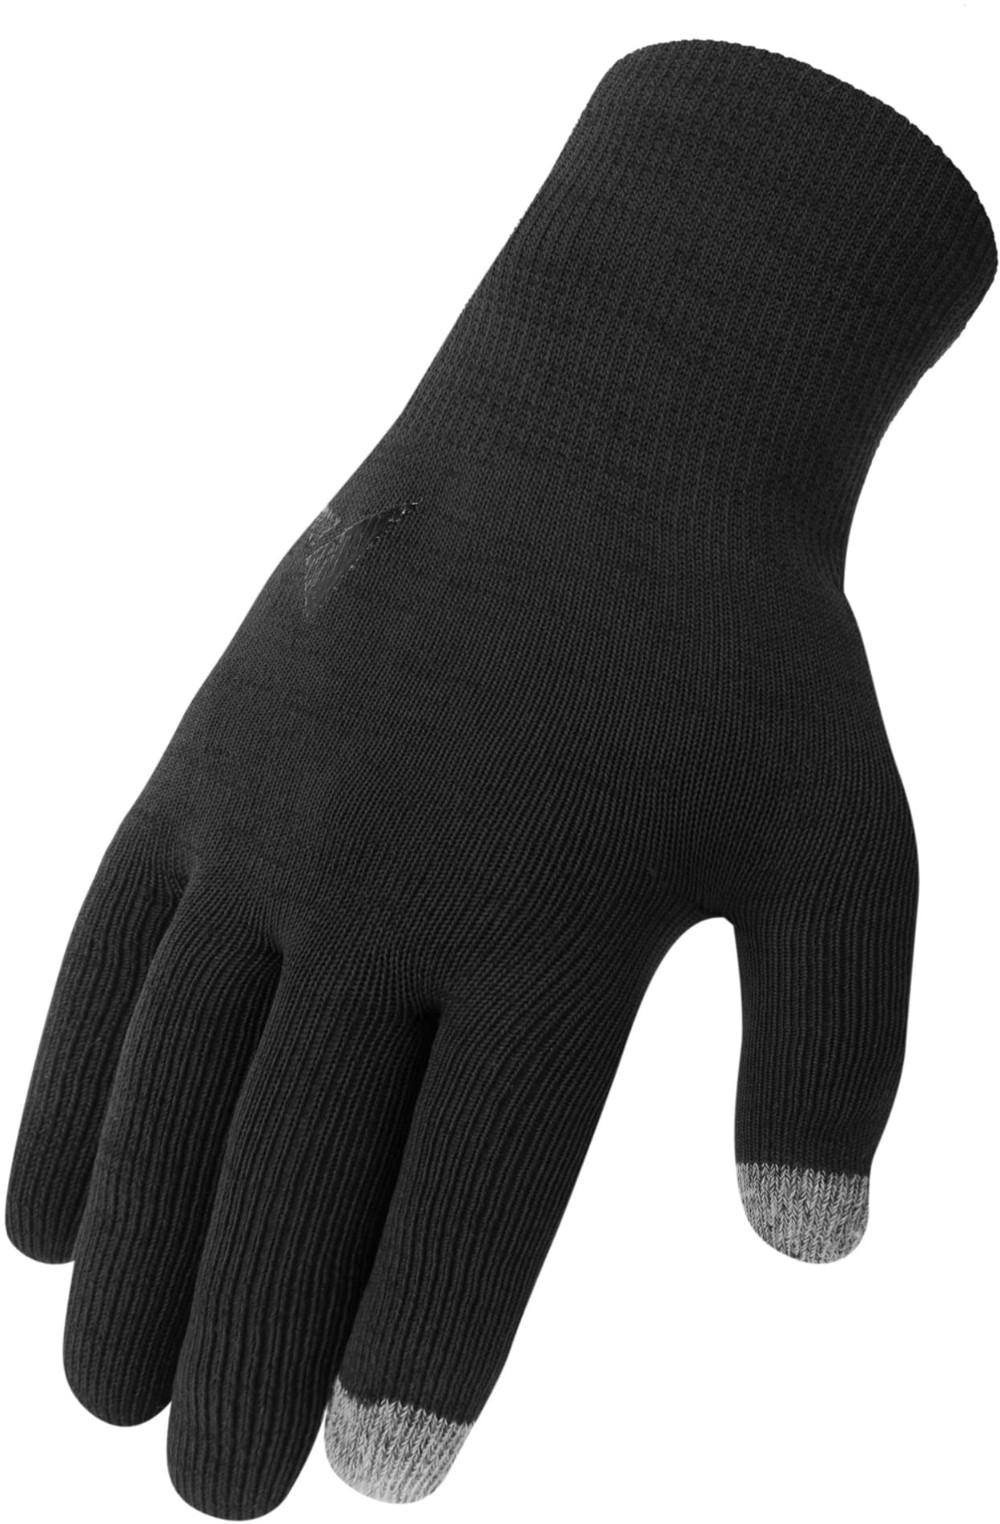 All Roads Waterproof Long Finger Gloves image 0